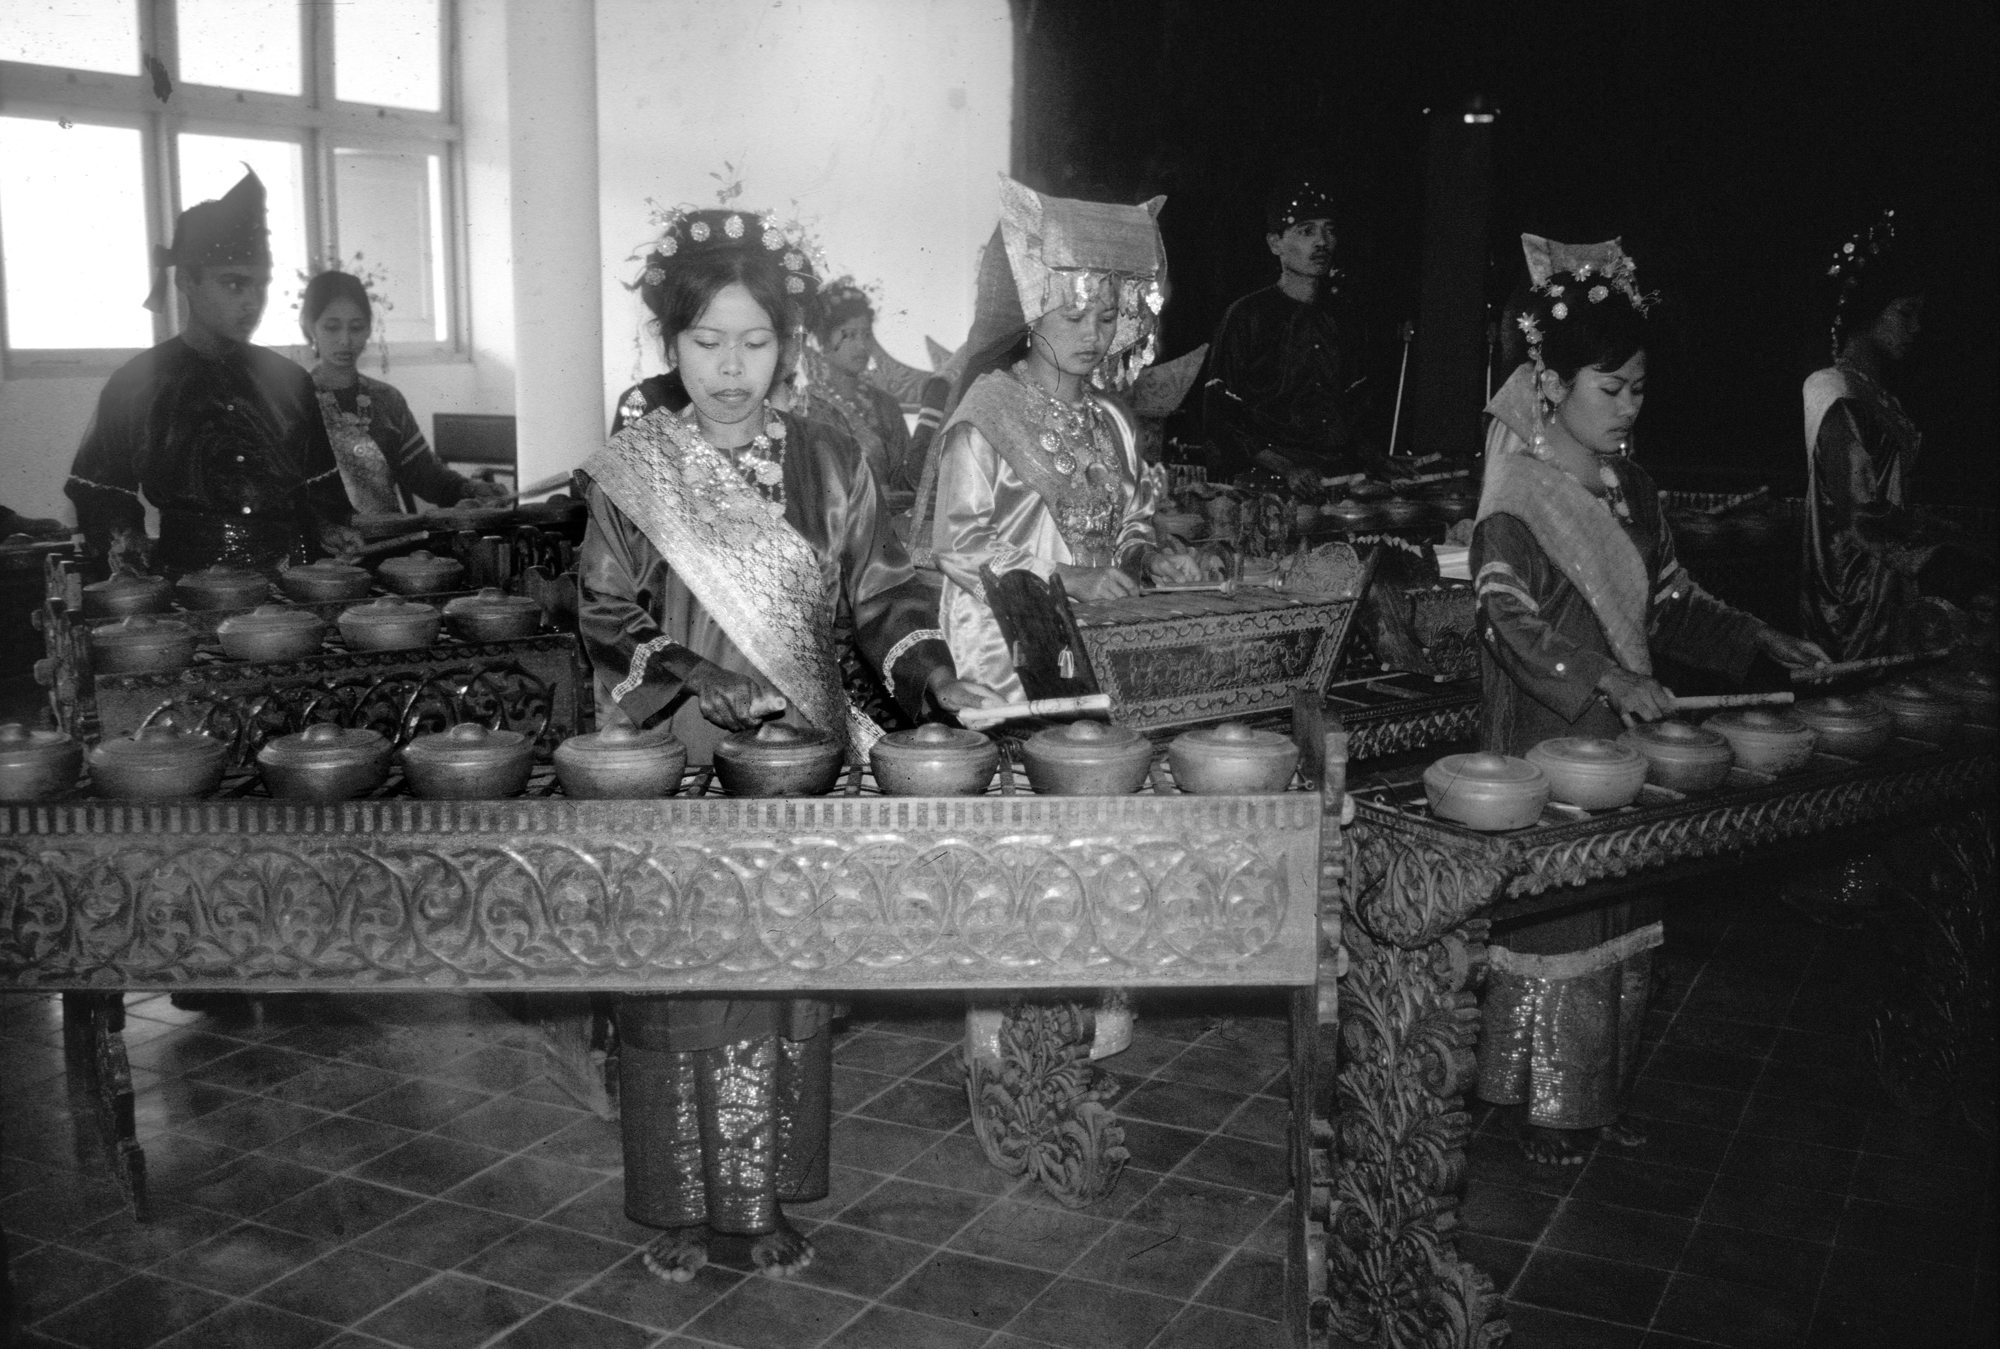 Fig. 1. Orkes talempong at ASKI, Padang Panjang, 1972. Photo by H. Kartomi. Used with permission.